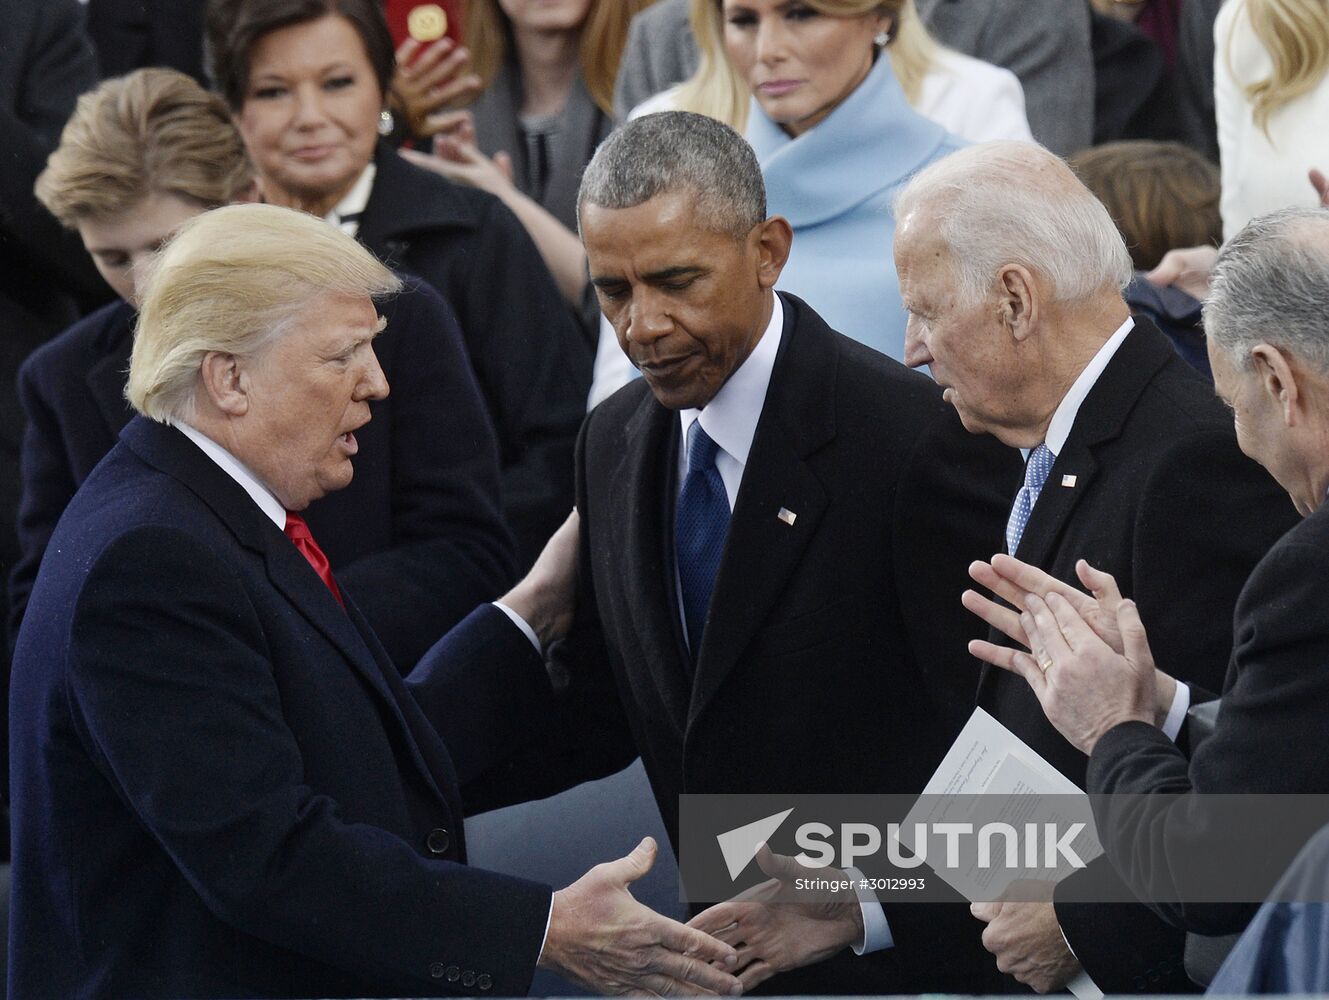 45th US President Donald Trump's inauguration in Washington